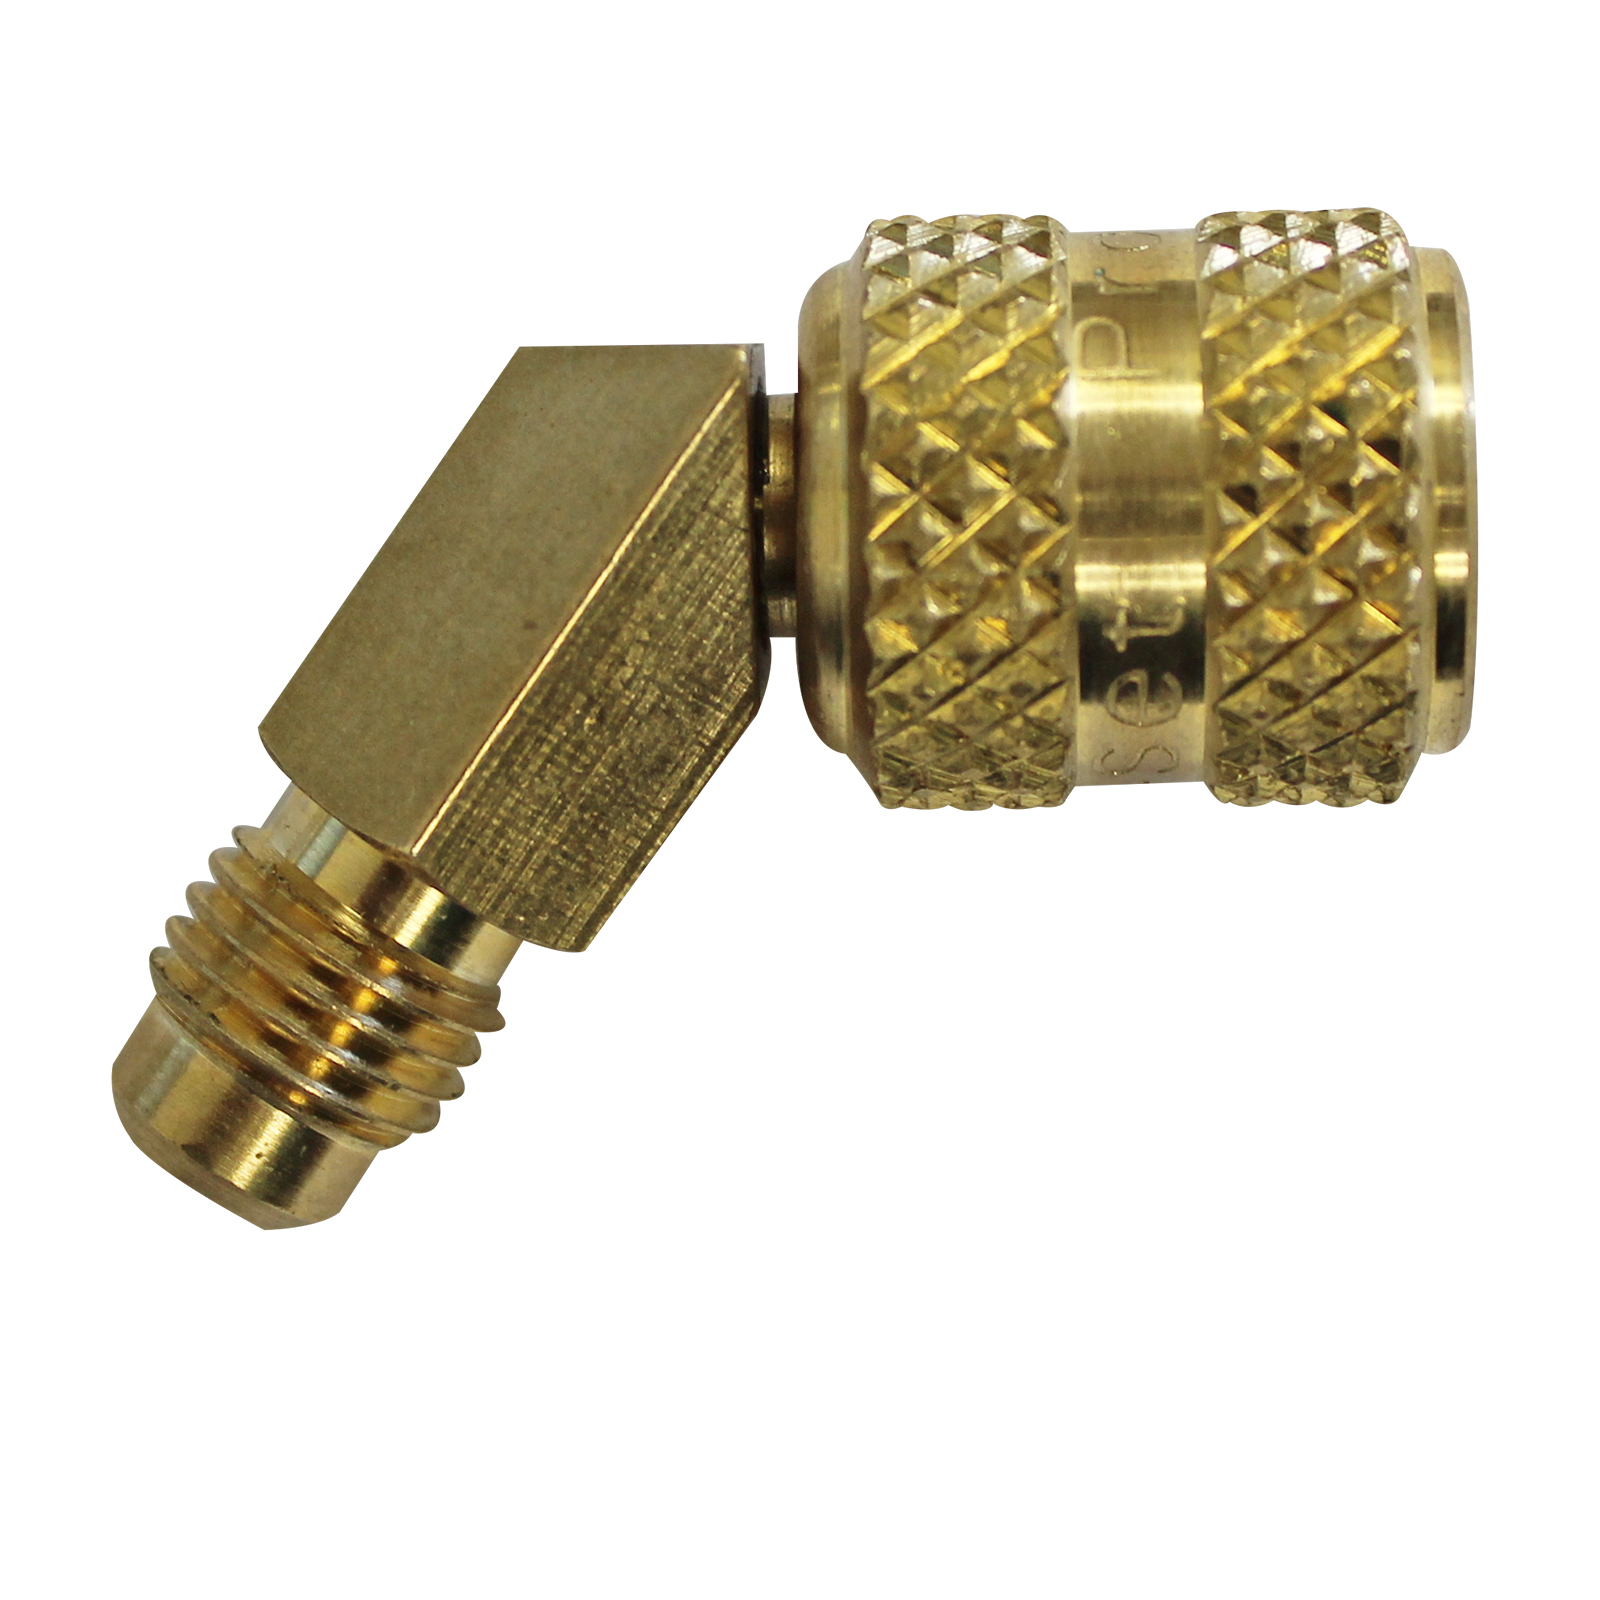 joyMerit Brass W21 To 1/4 SAE Air Conditioner Adapter Vacuum Pump Adapter Fitting 